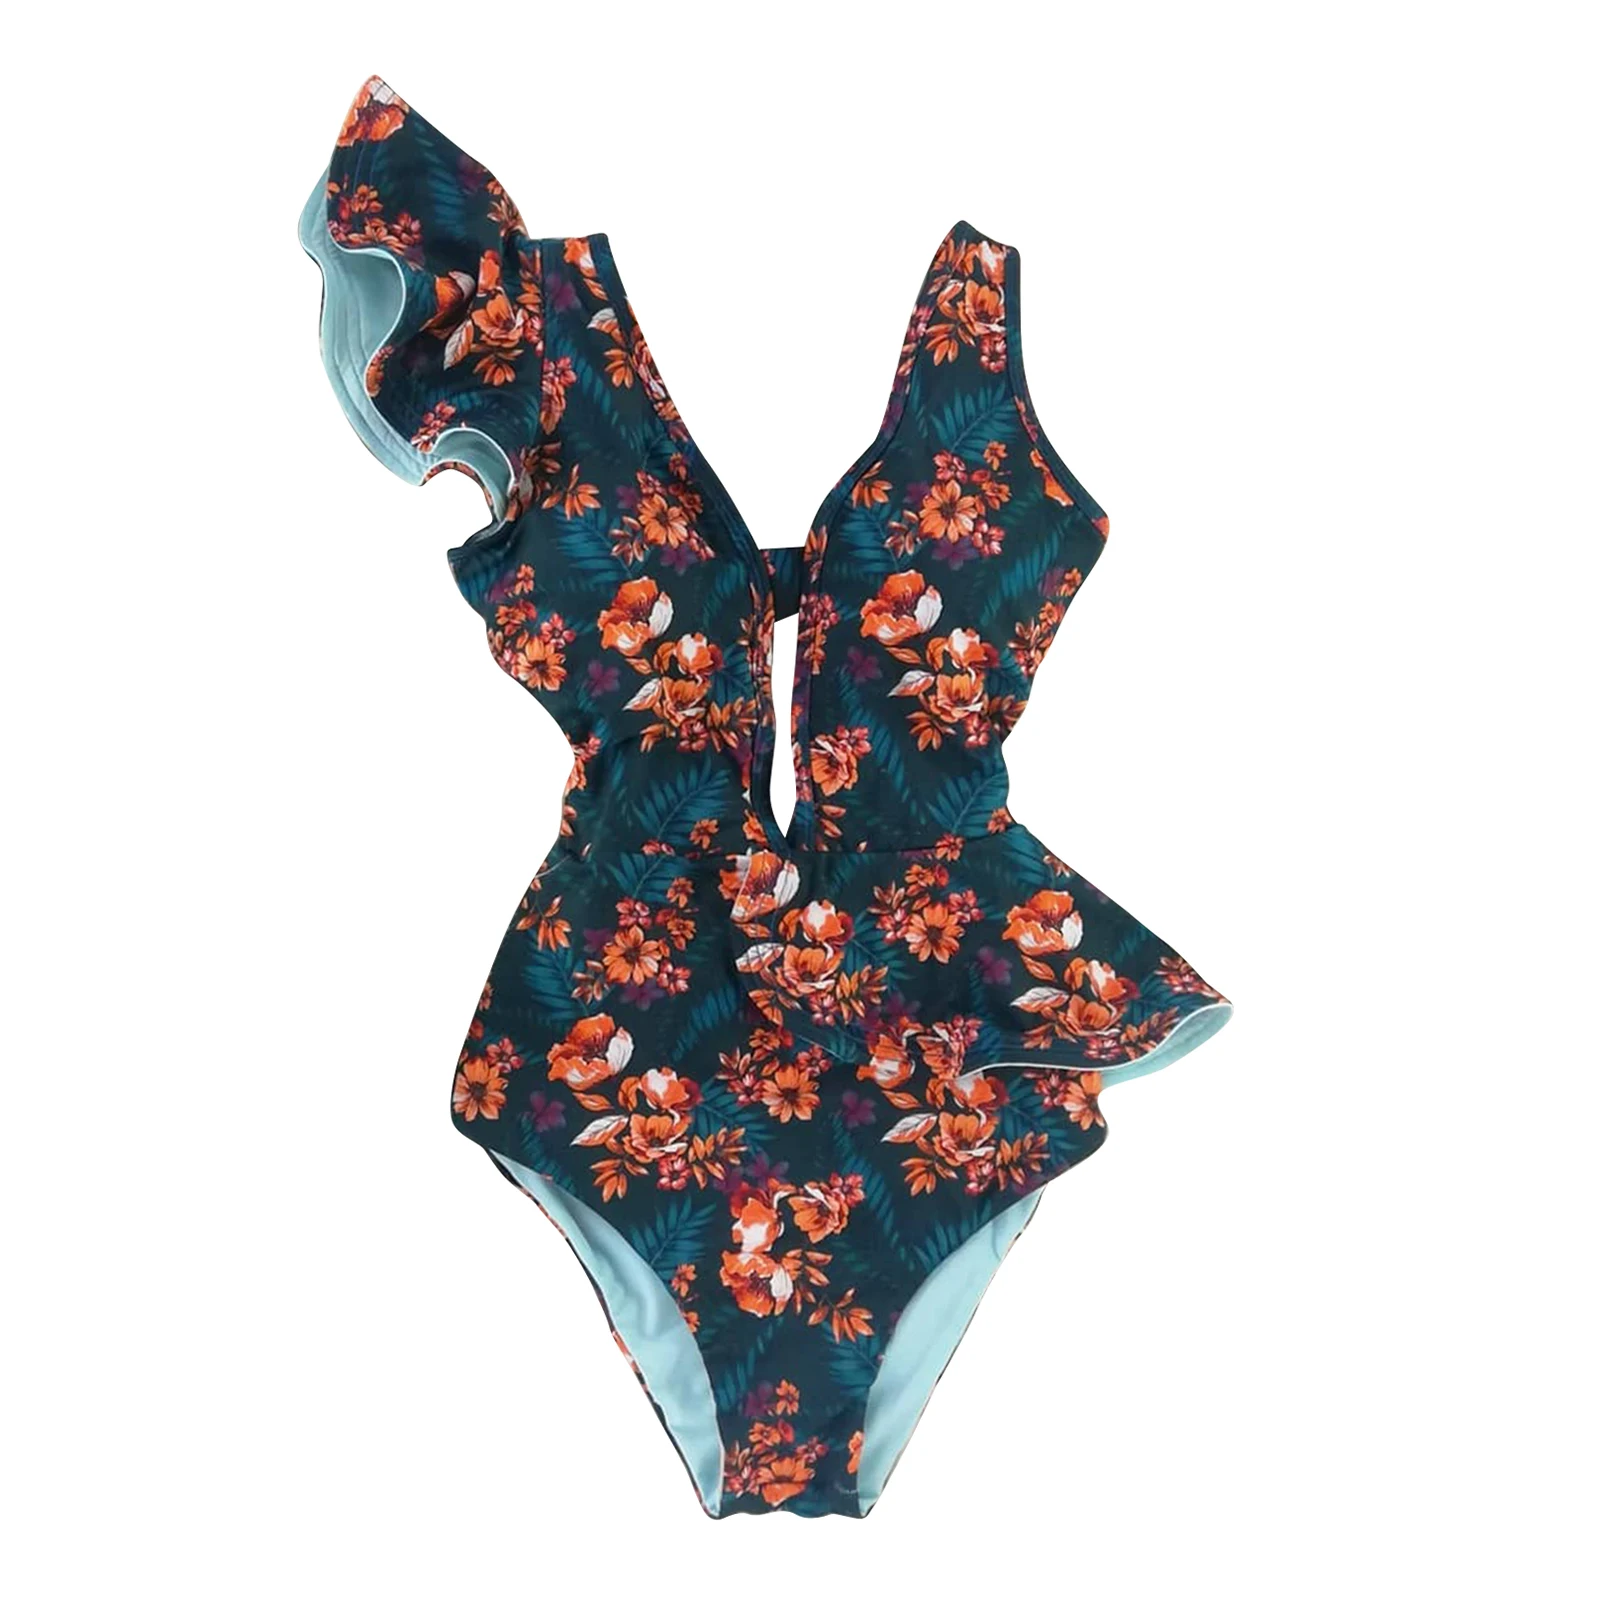 NEW Sexy One-Piece Swimsuit Swimwear Bikini Women Bathing Suit Deep-V Beachwear Bathing Suit Monkini Clothes S-XL